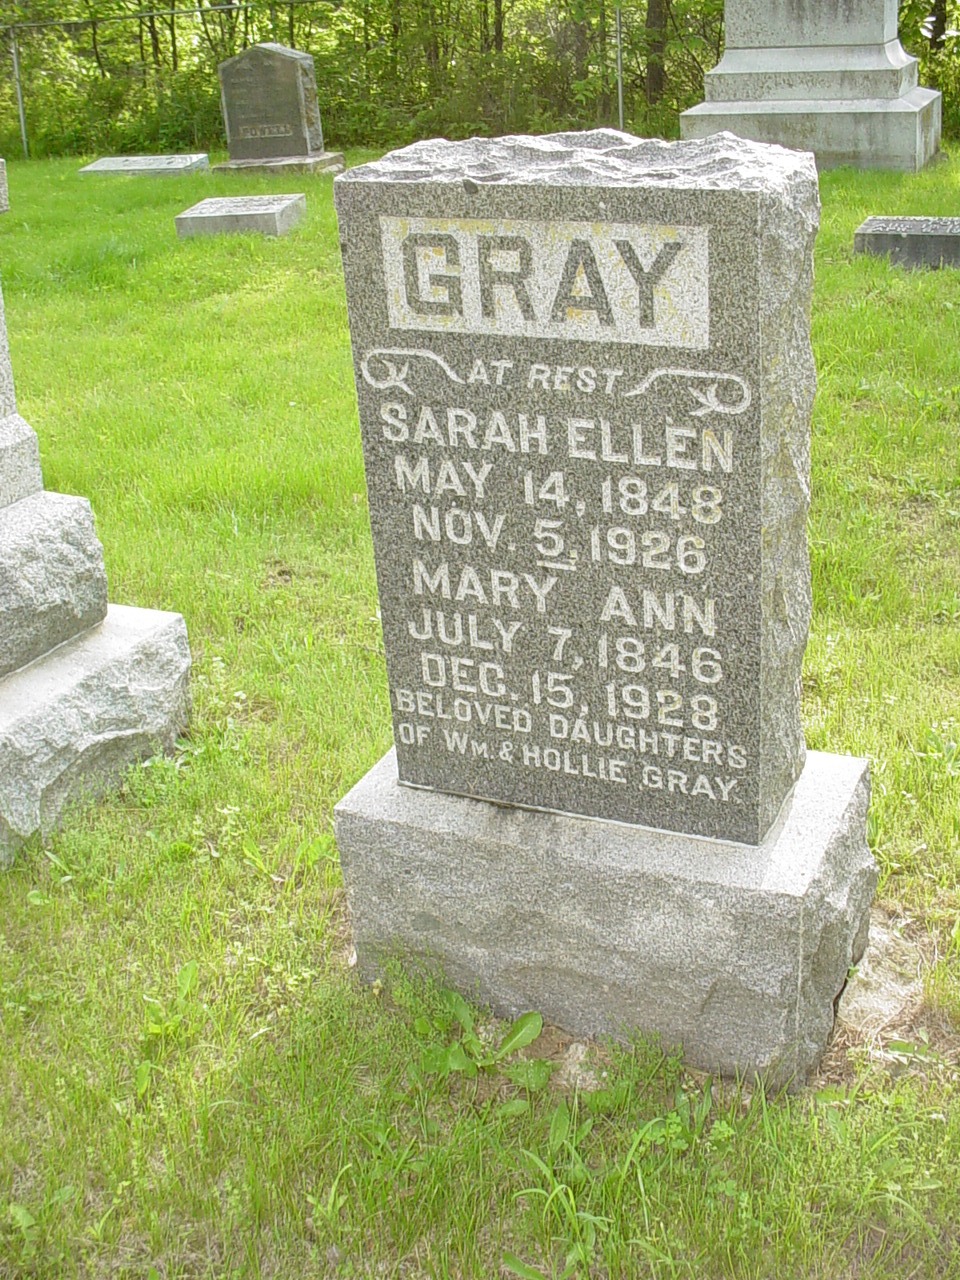  Mary Ann & Sarah Ellen Gray